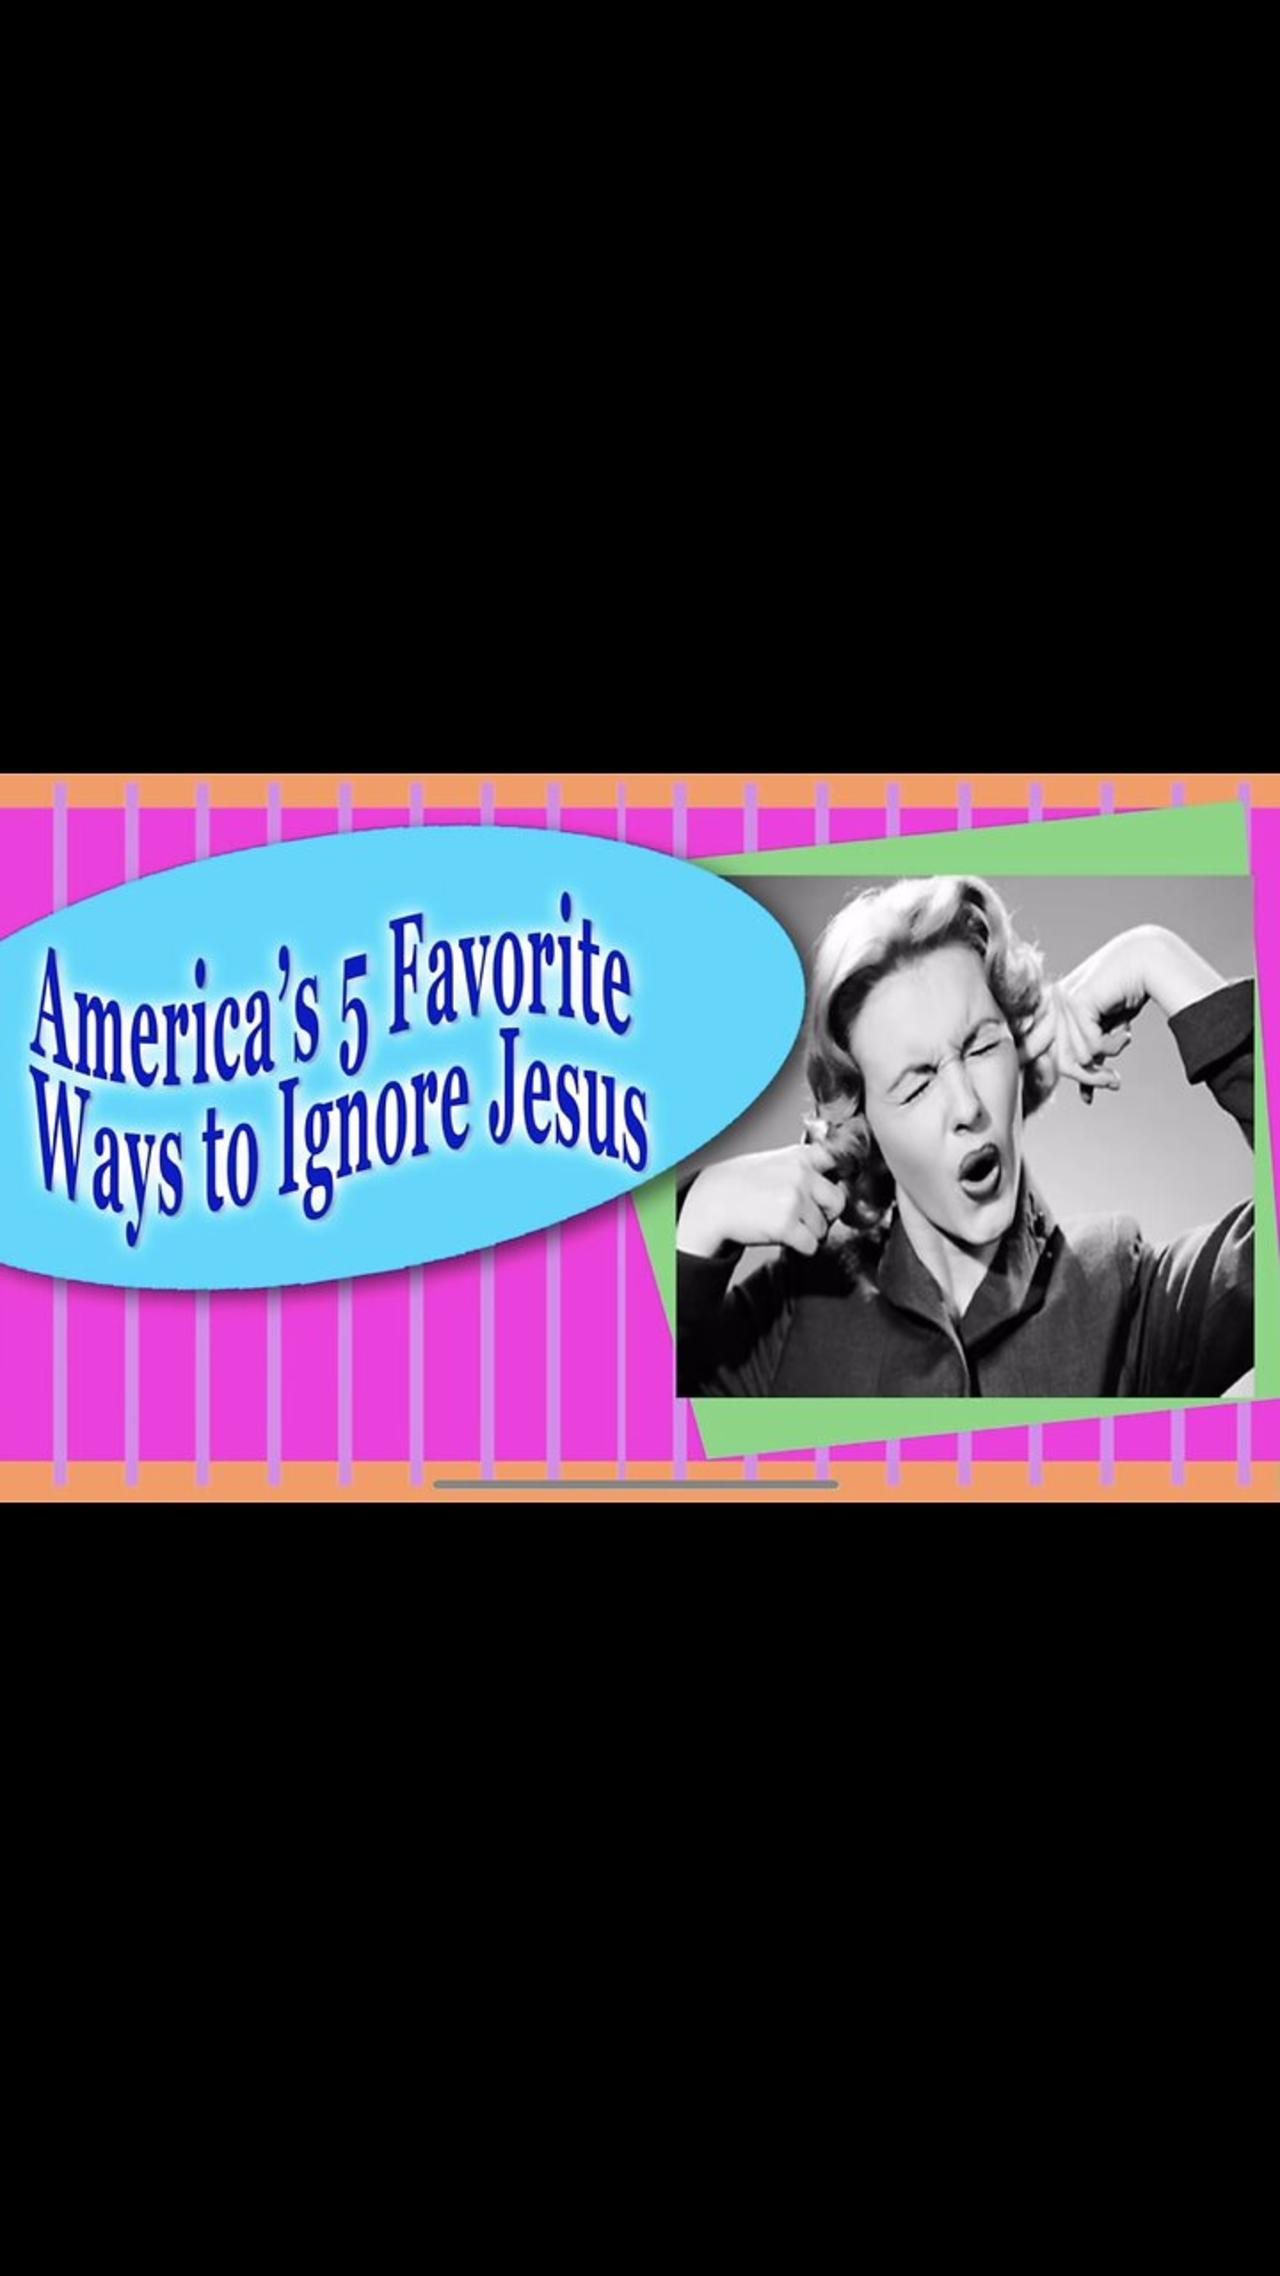 America’s 5 favorite ways to ignore Jesus